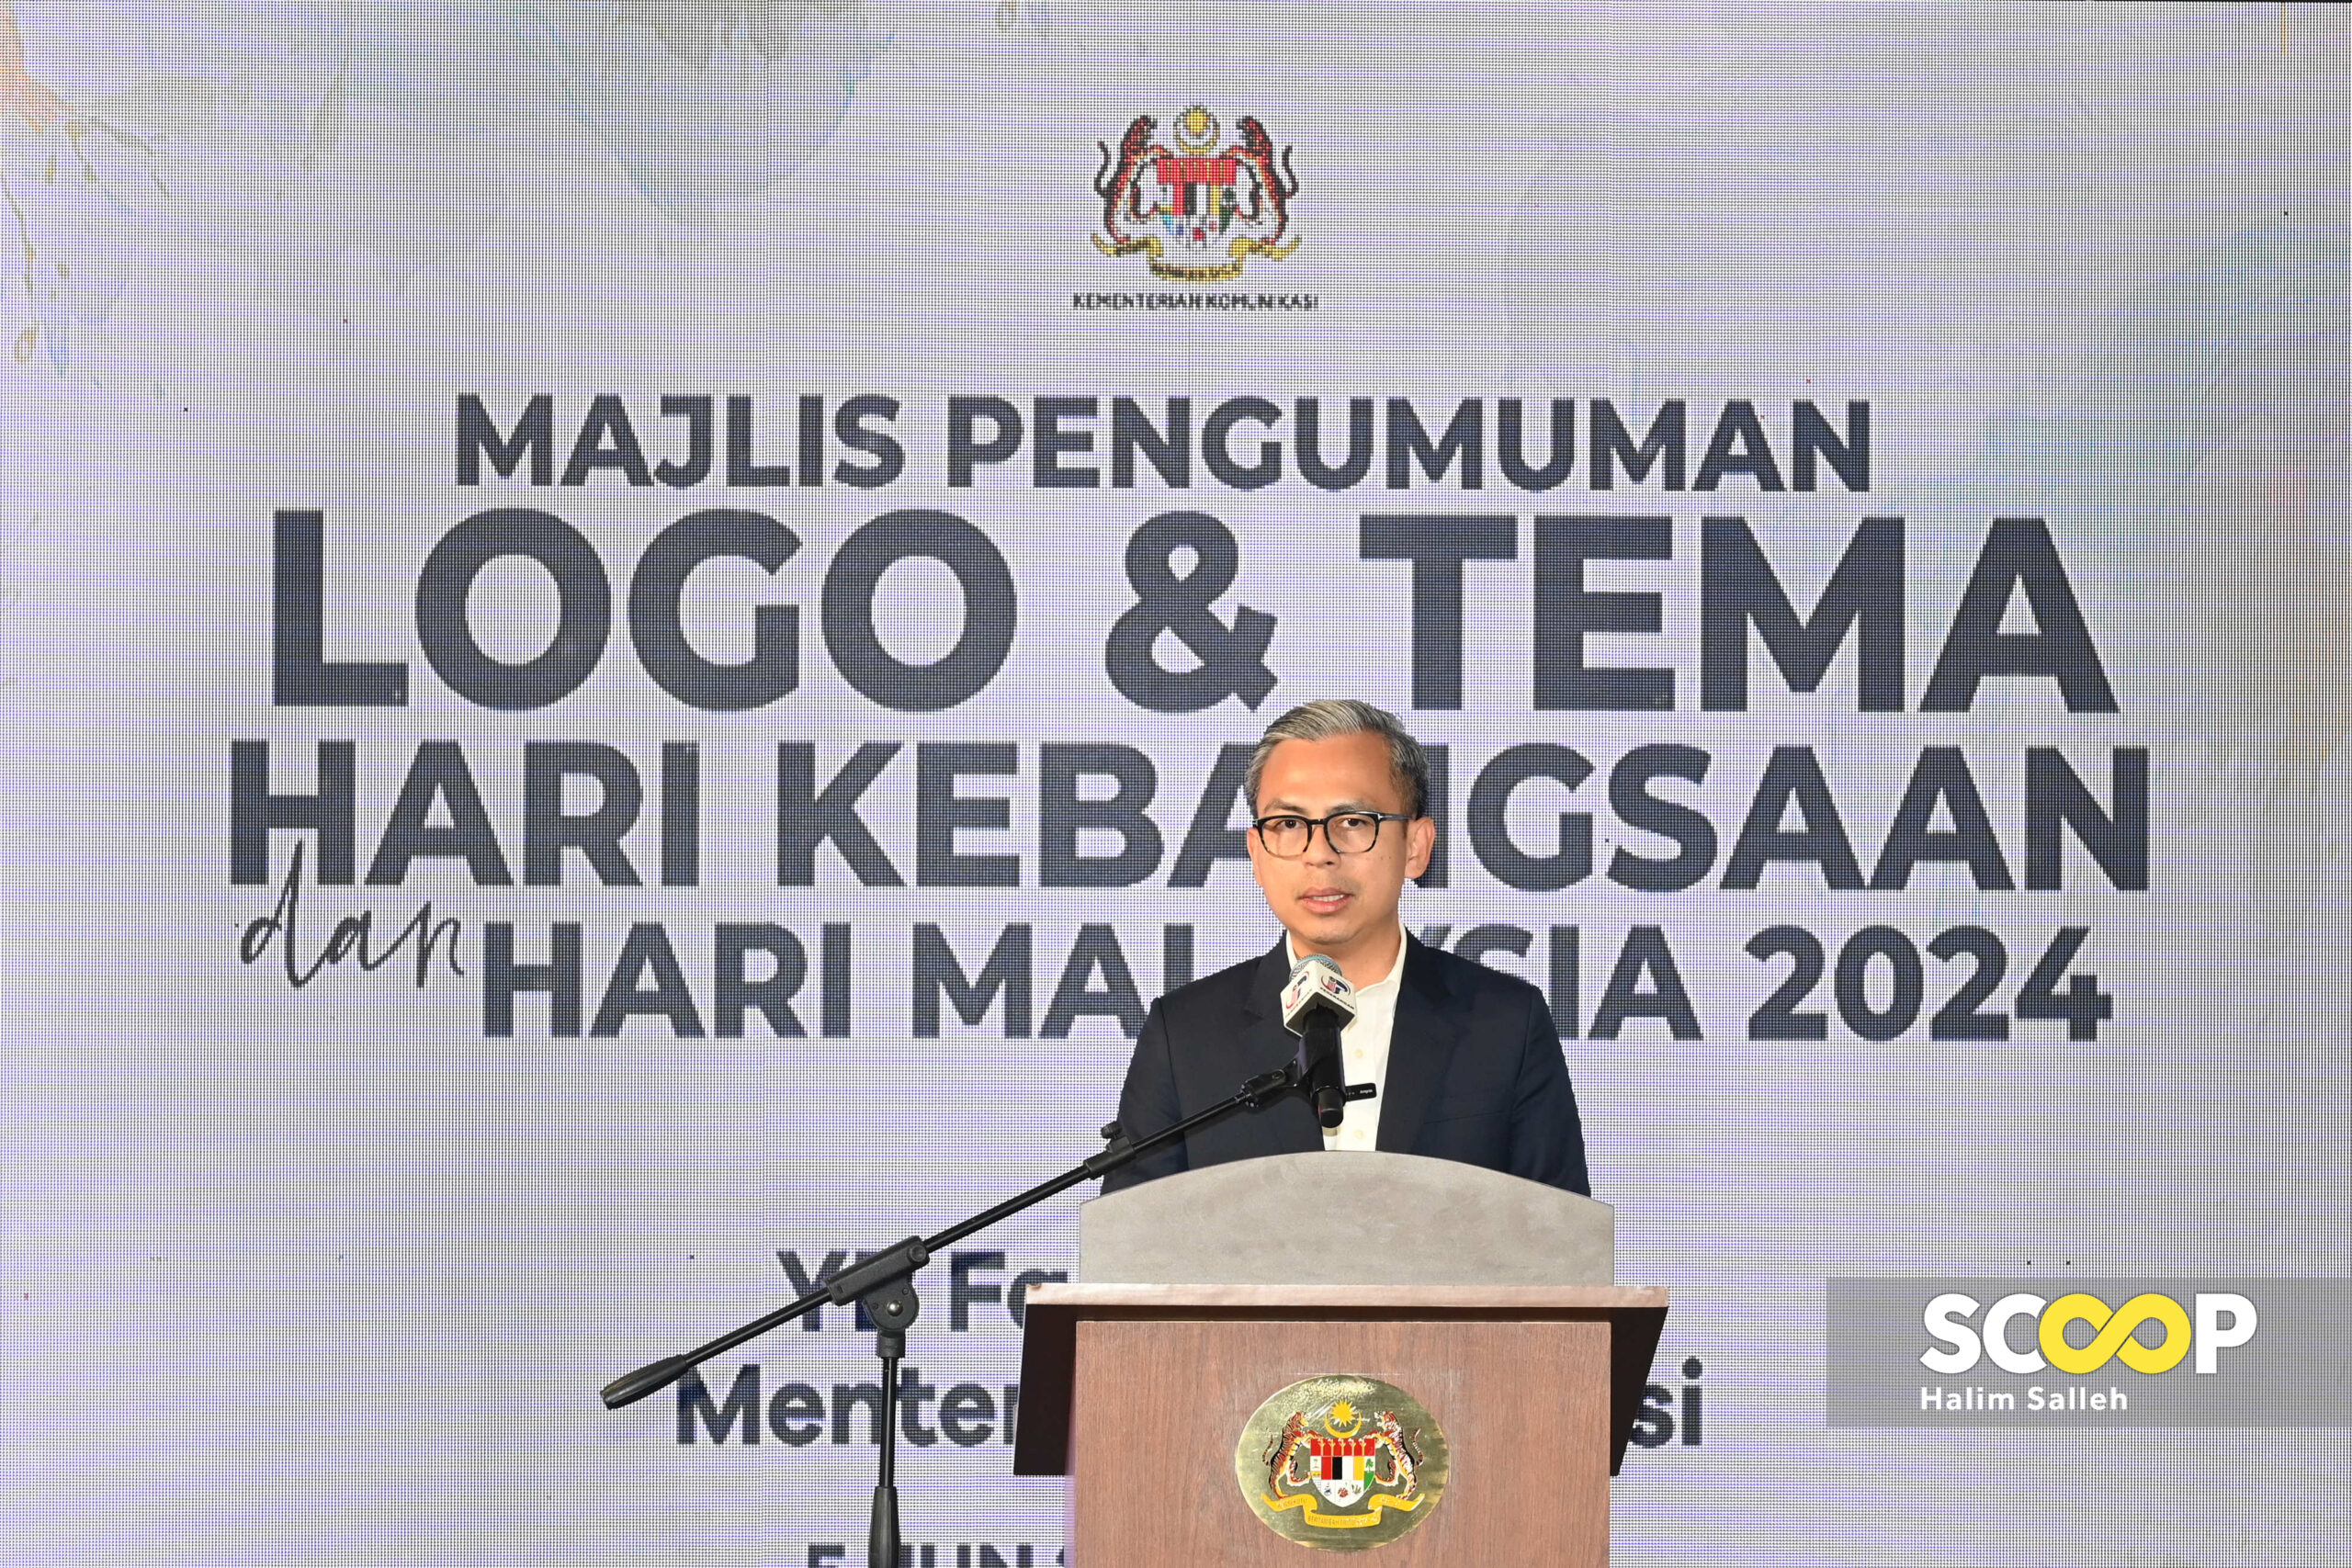 'Malaysia Madani: Jiwa Merdeka' is this year's National Day, Malaysia Day theme